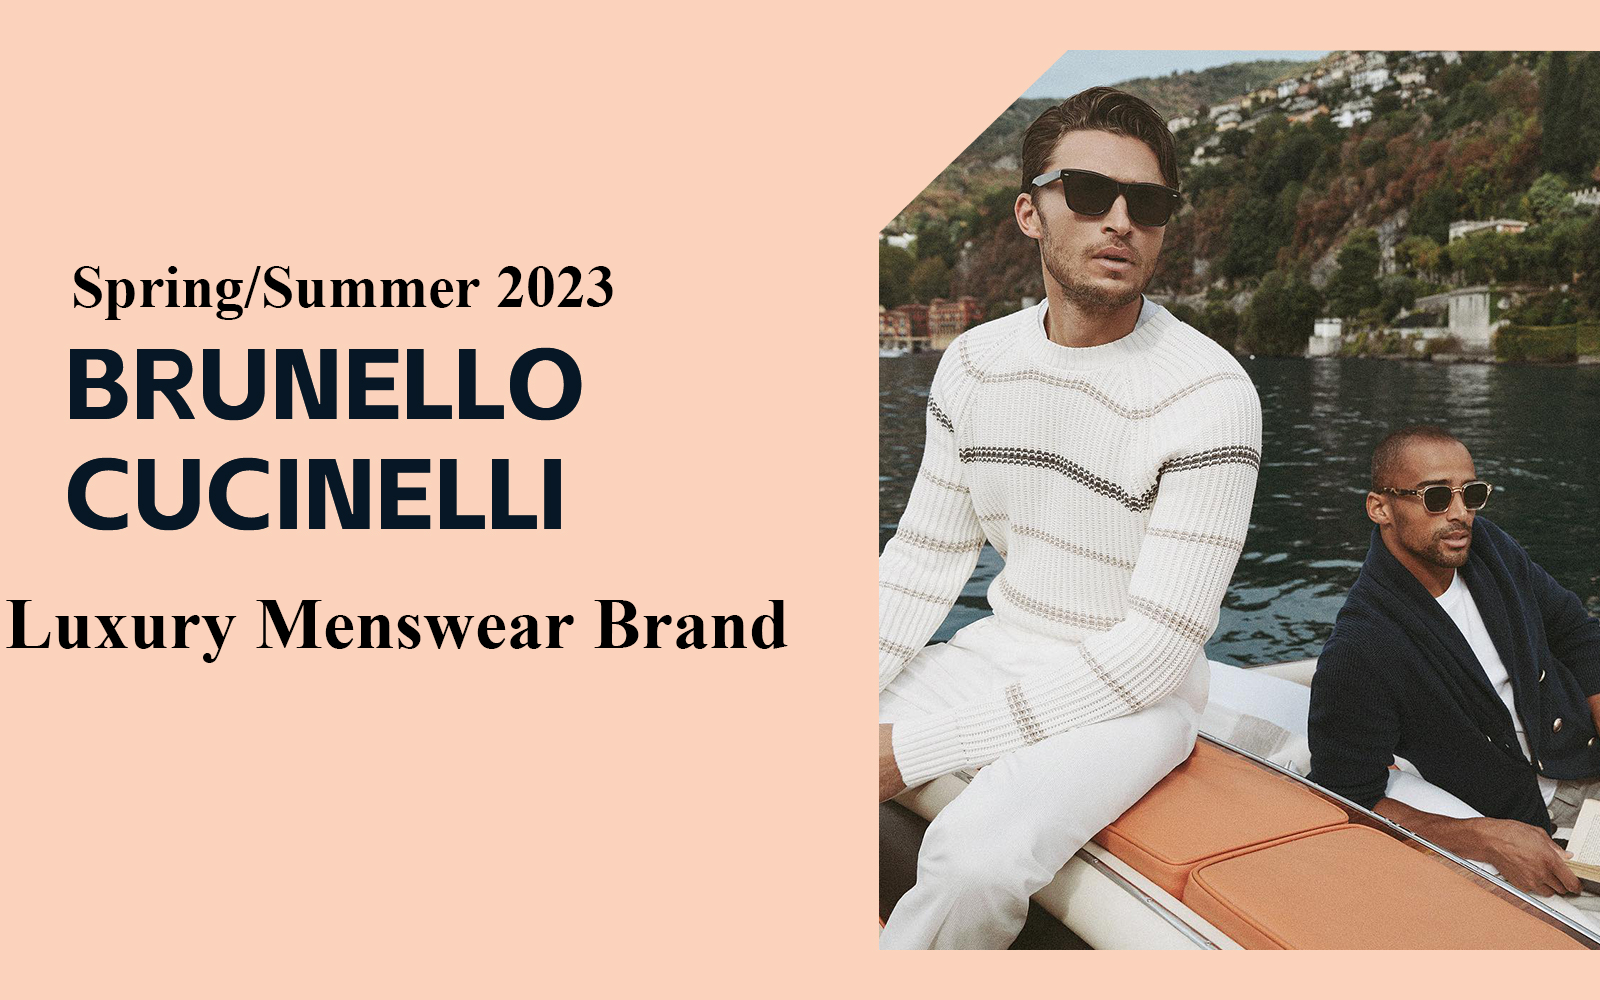 The Analysis of Brunello Cucinelli The Luxury Menswear Brand